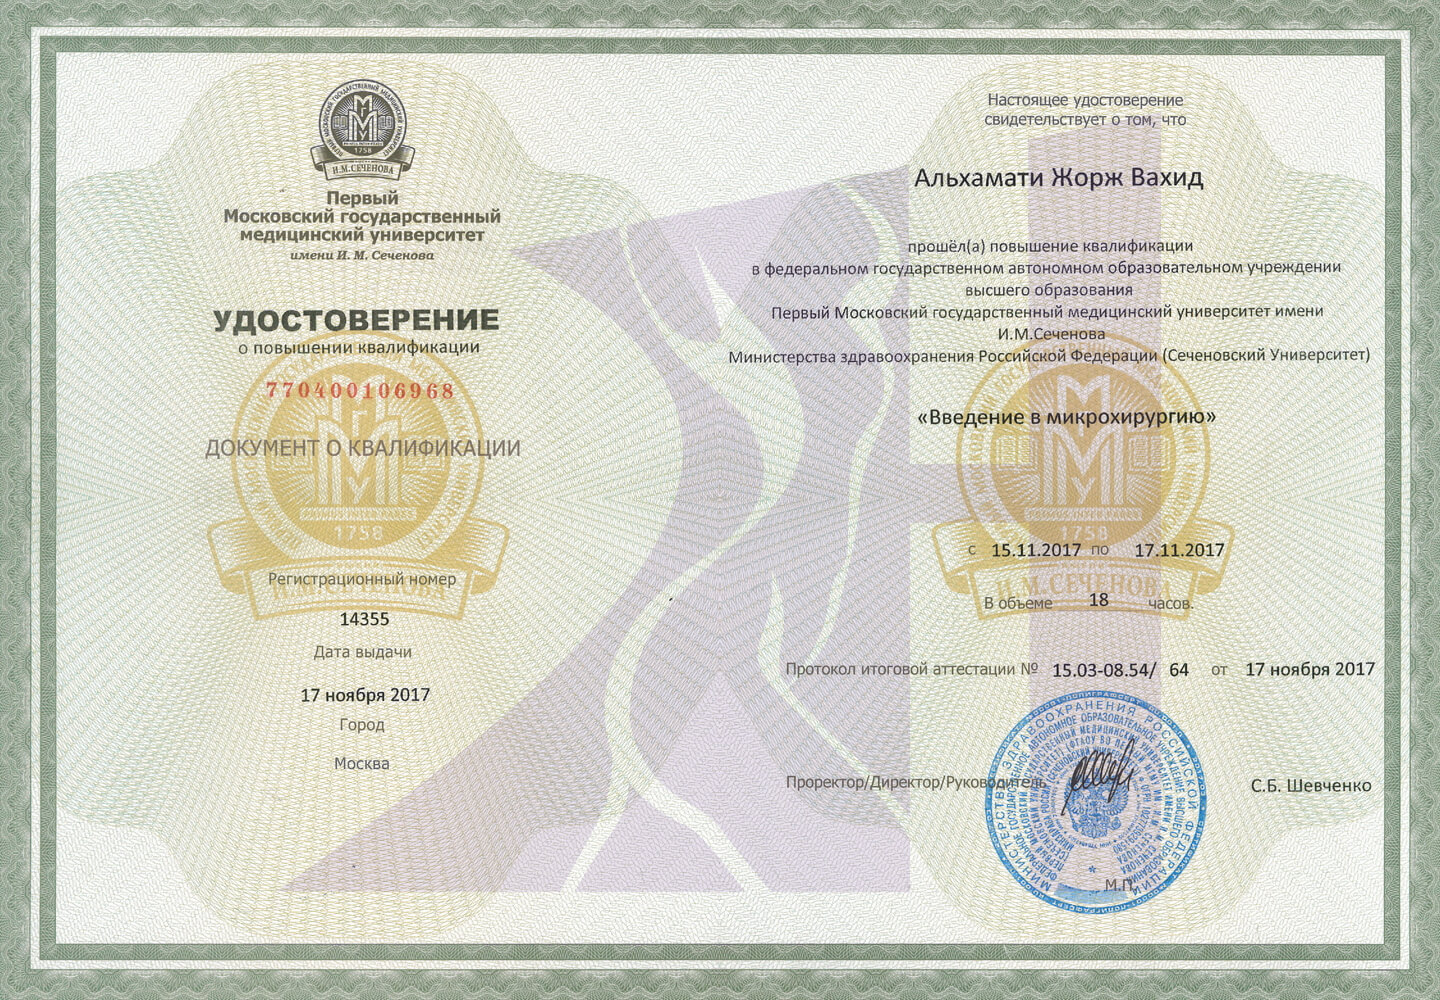 Diplomas and certificates (Hamati)